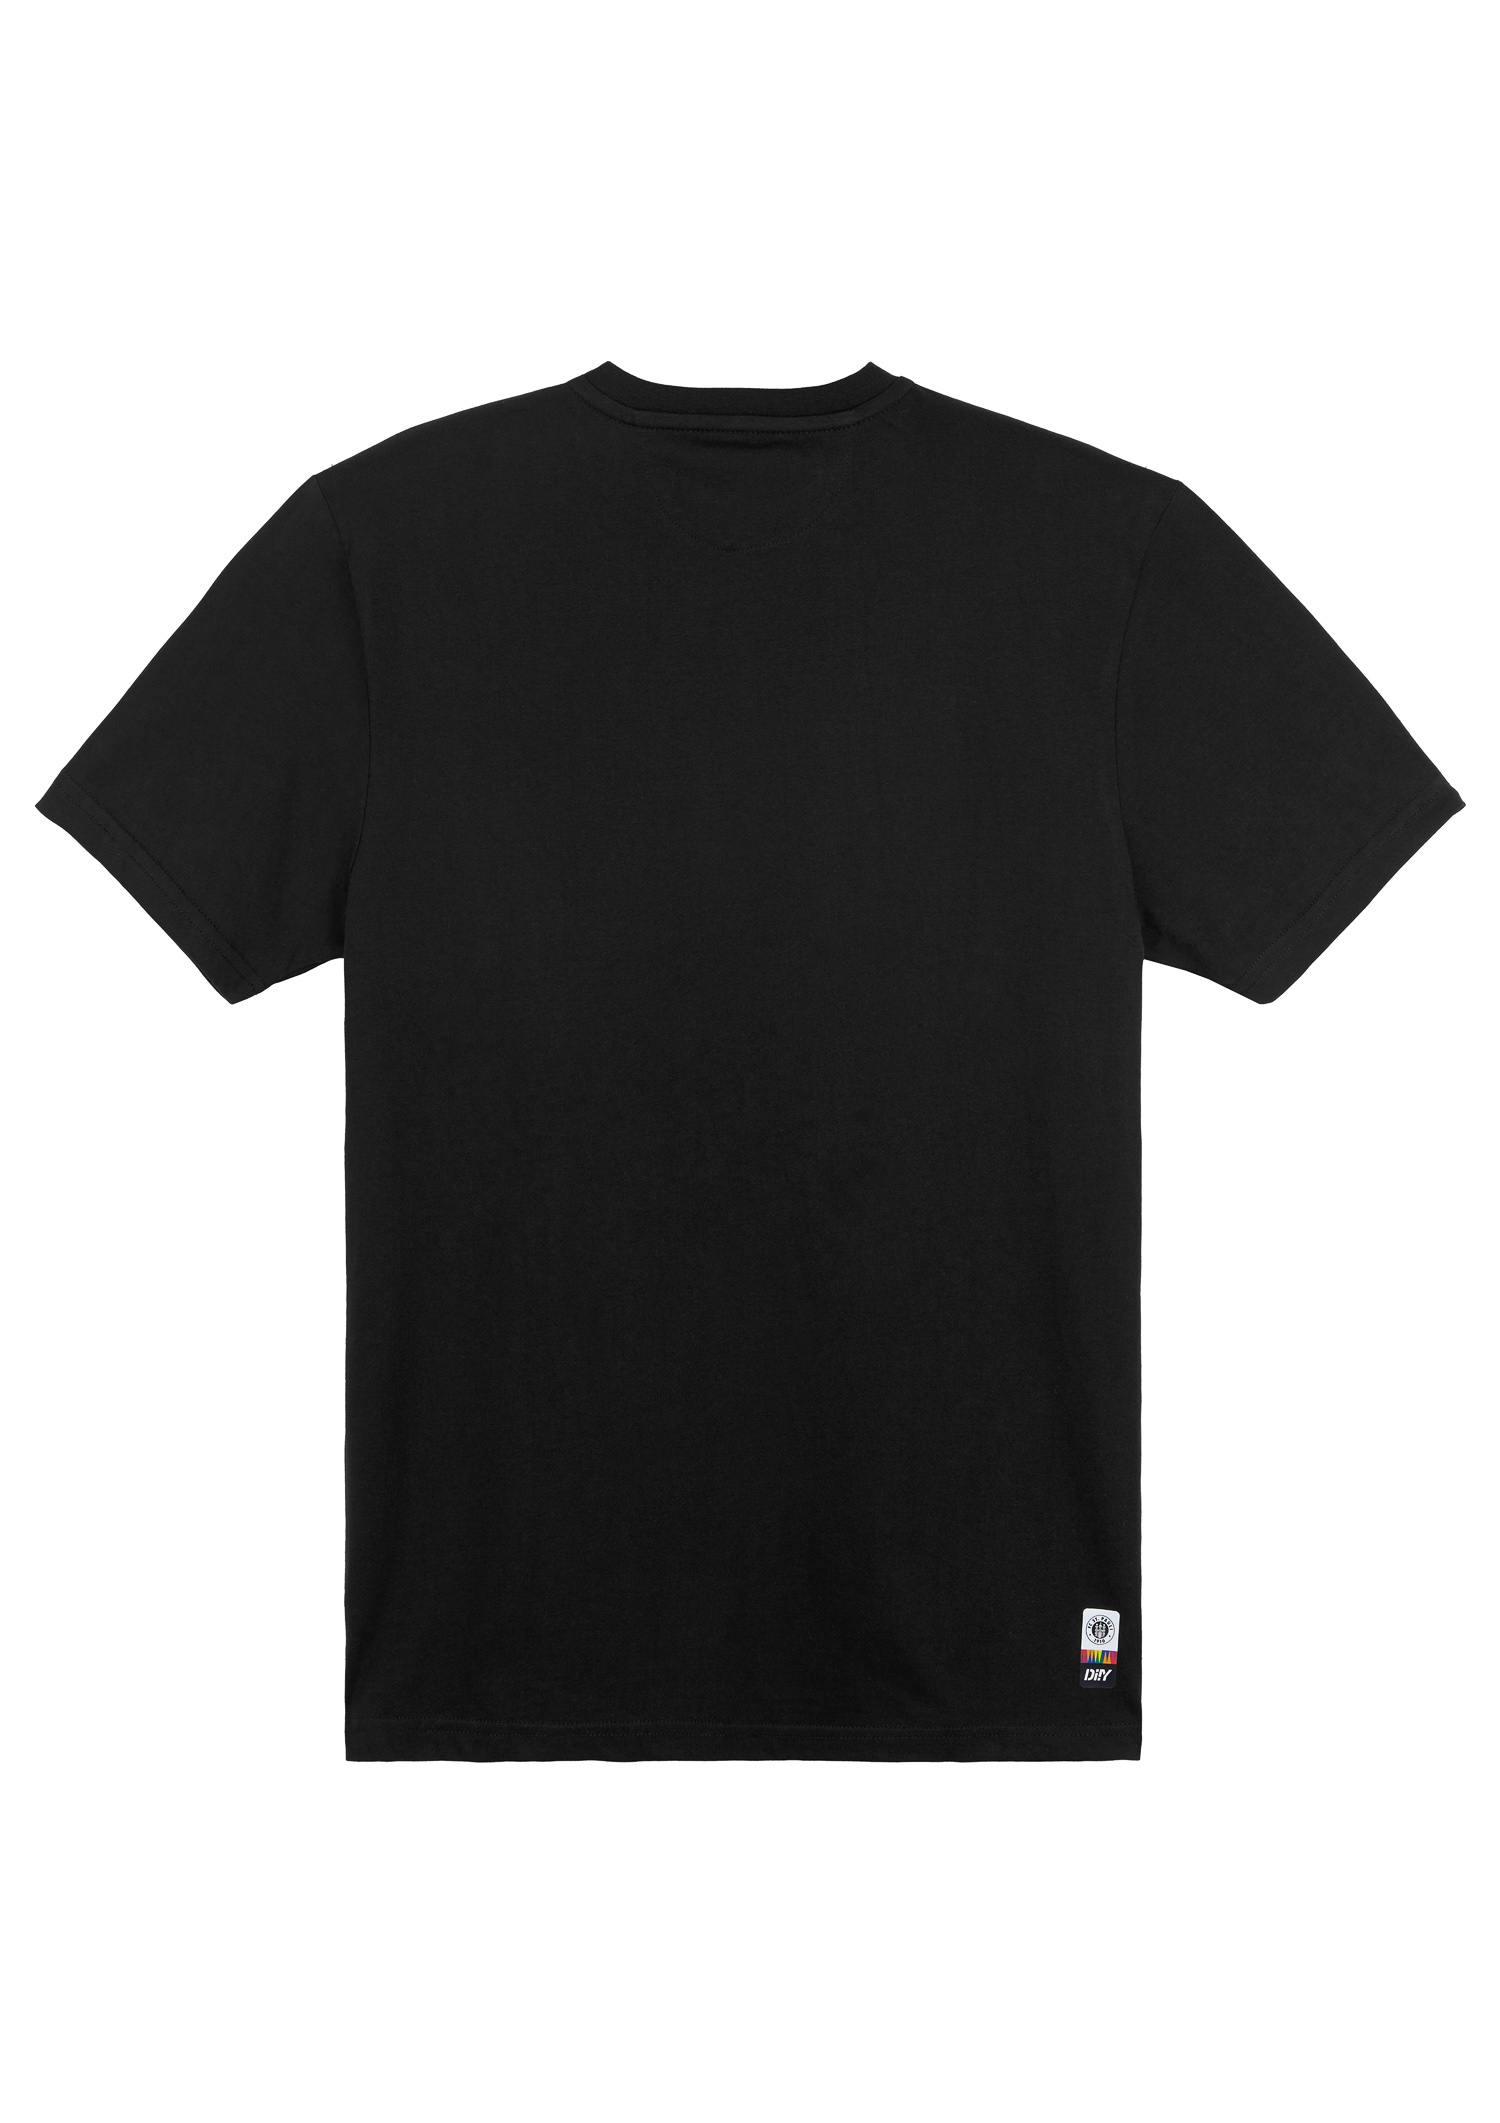 DIIY - Logo T-Shirt 2023-24 Schwarz 